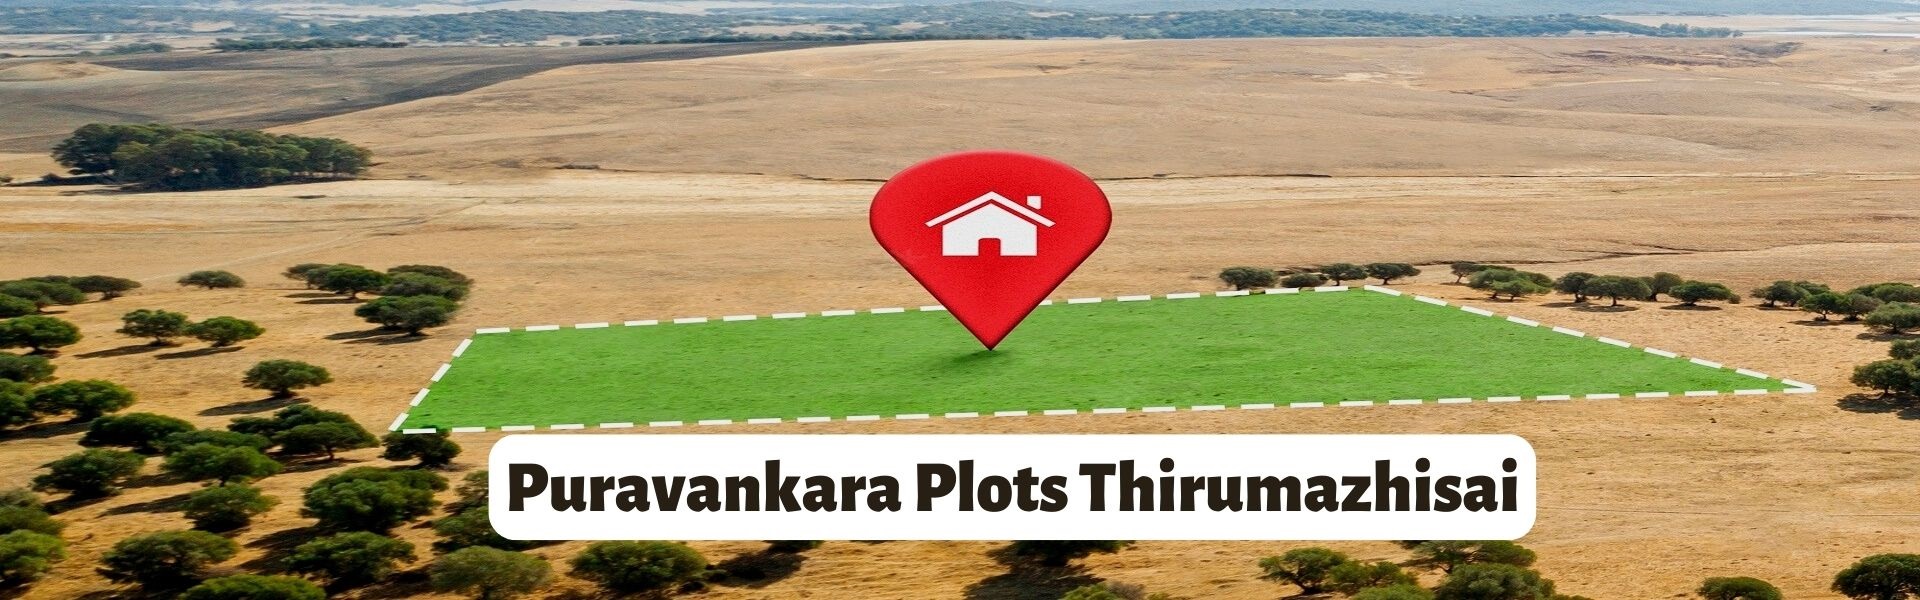 Puravankara Plots Banner Image